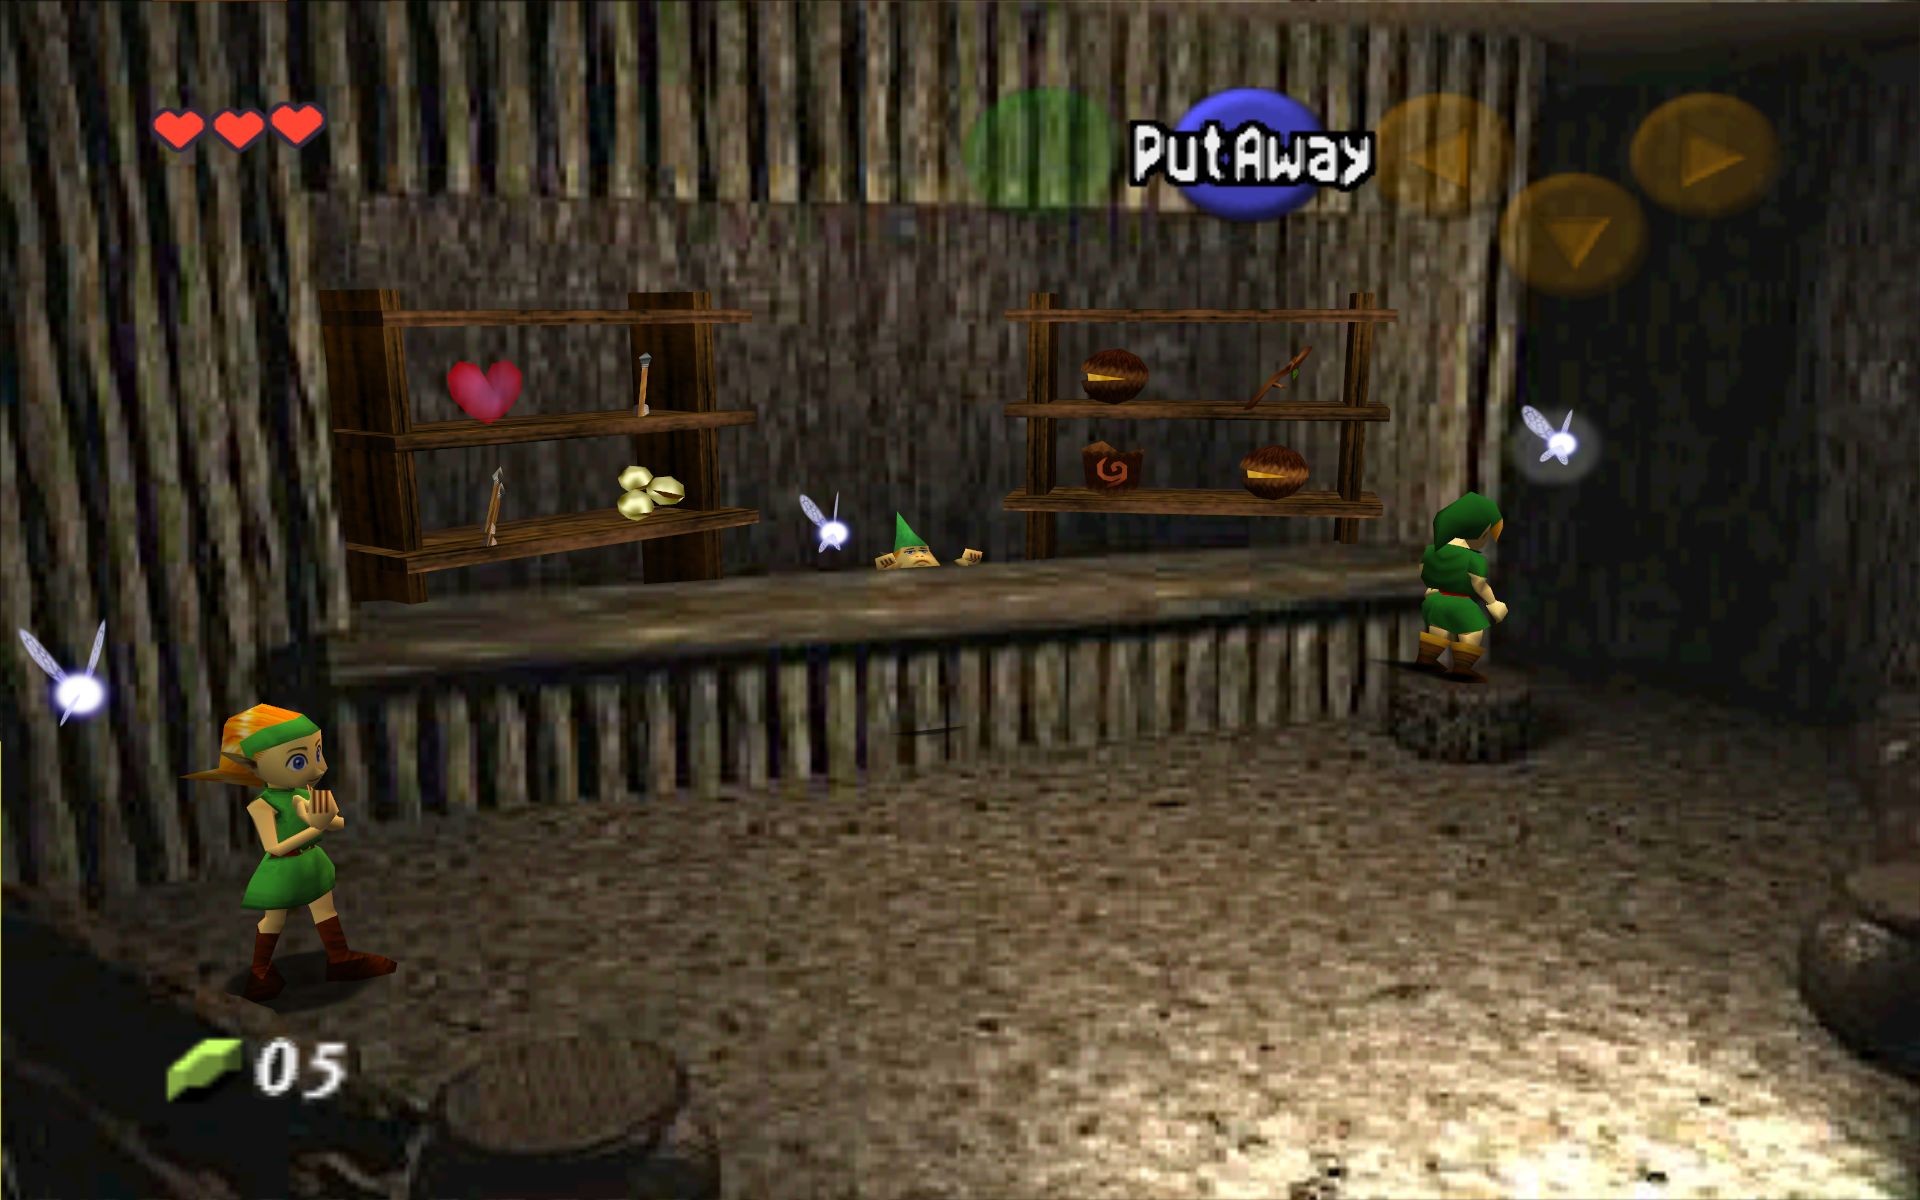 Descarga gratuita de fondo de pantalla para móvil de The Legend Of Zelda: Ocarina Of Time, Zelda, Videojuego.